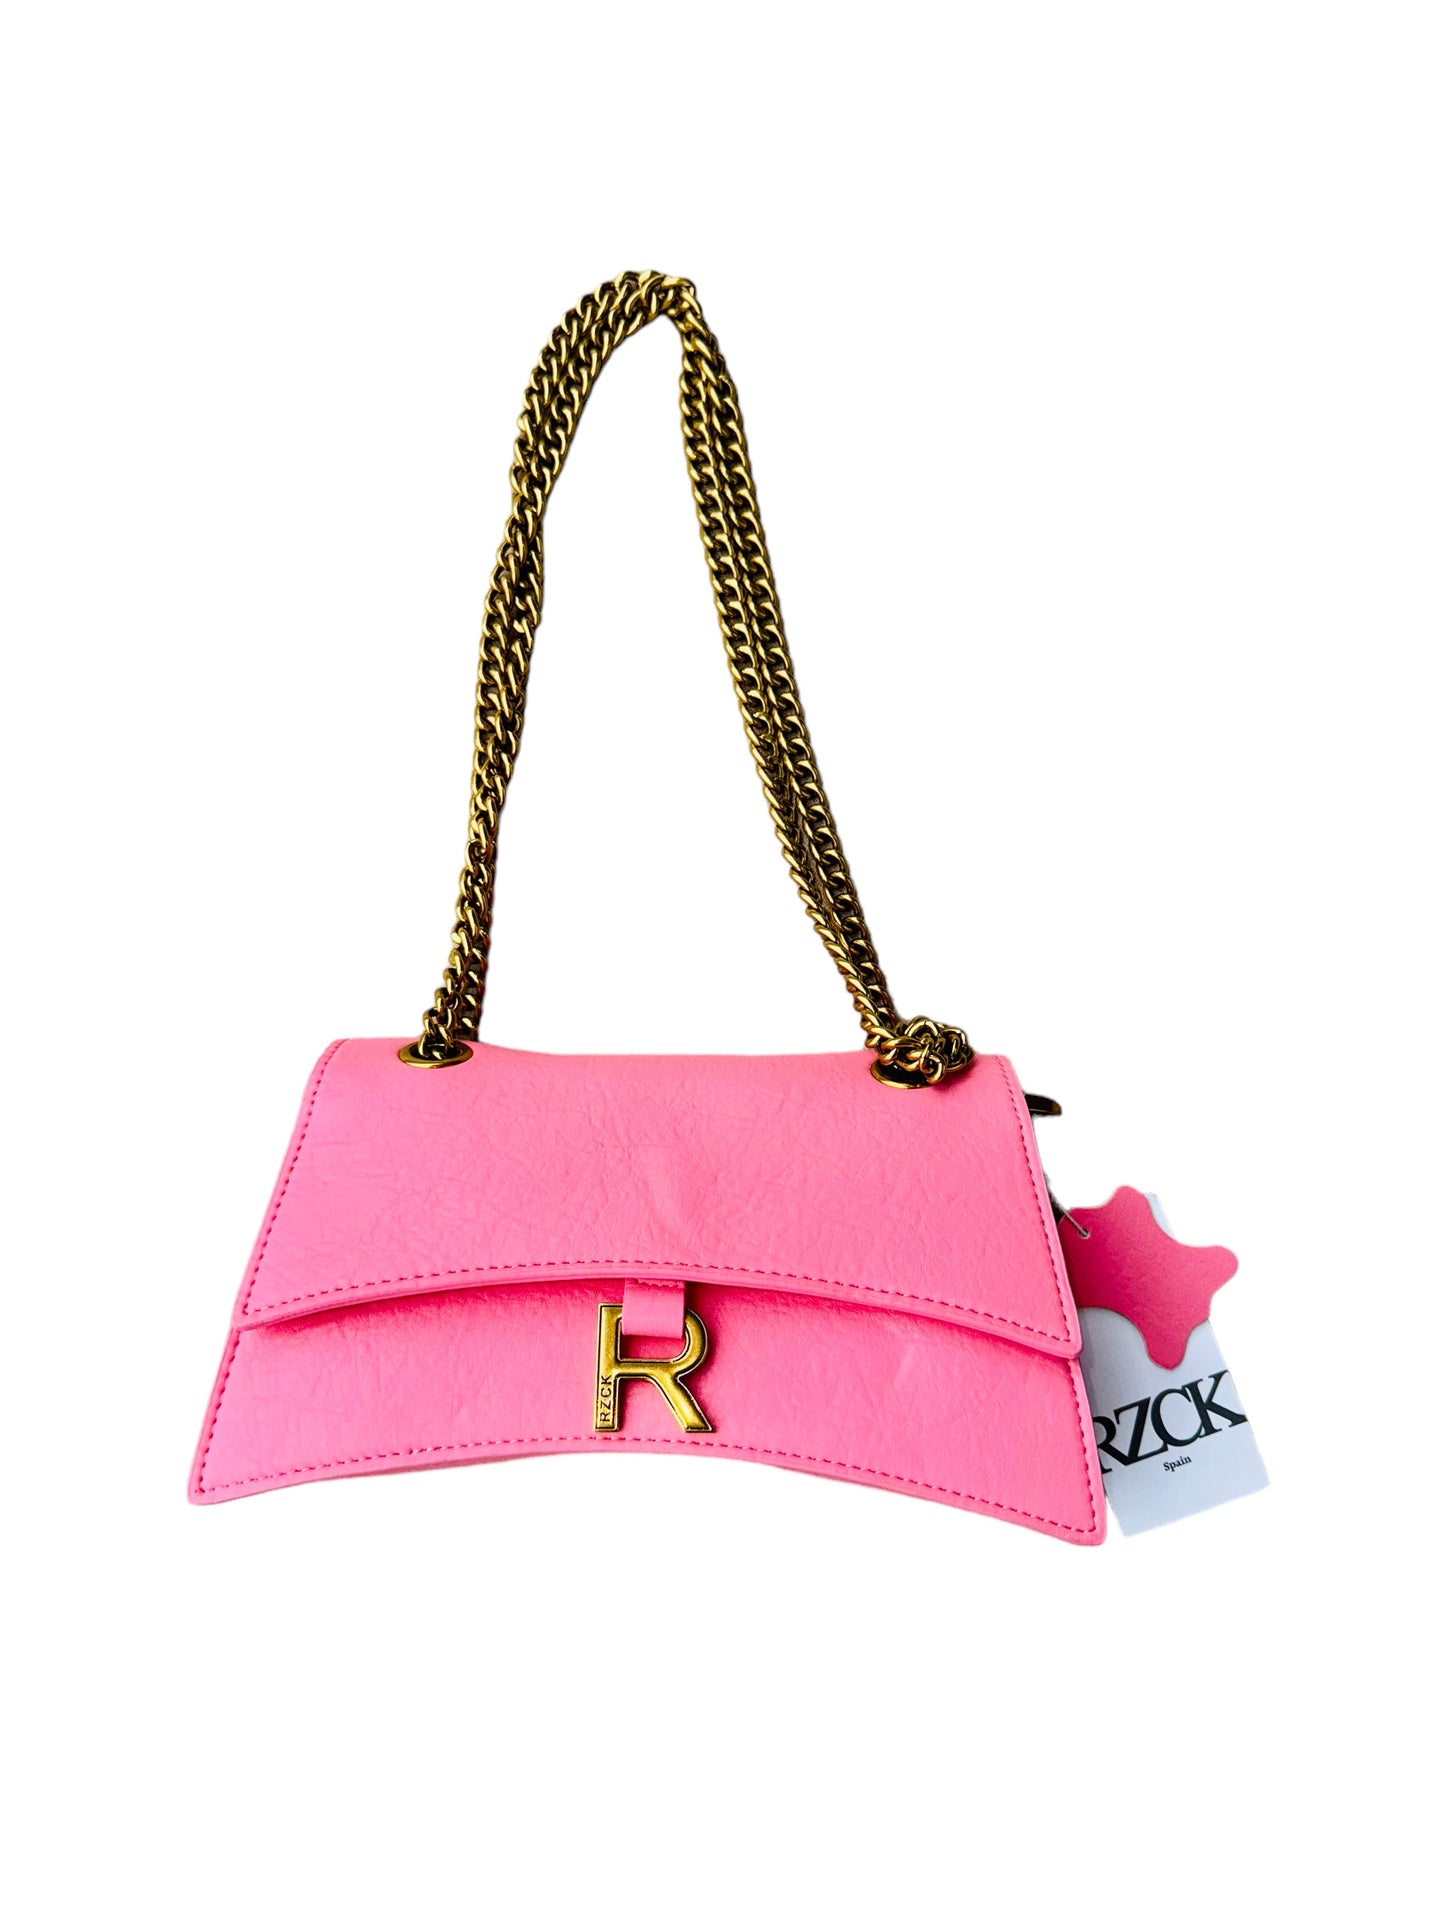 Pink Women Bags Shoulder Bag Classic Handbags Ladies Cute Purses